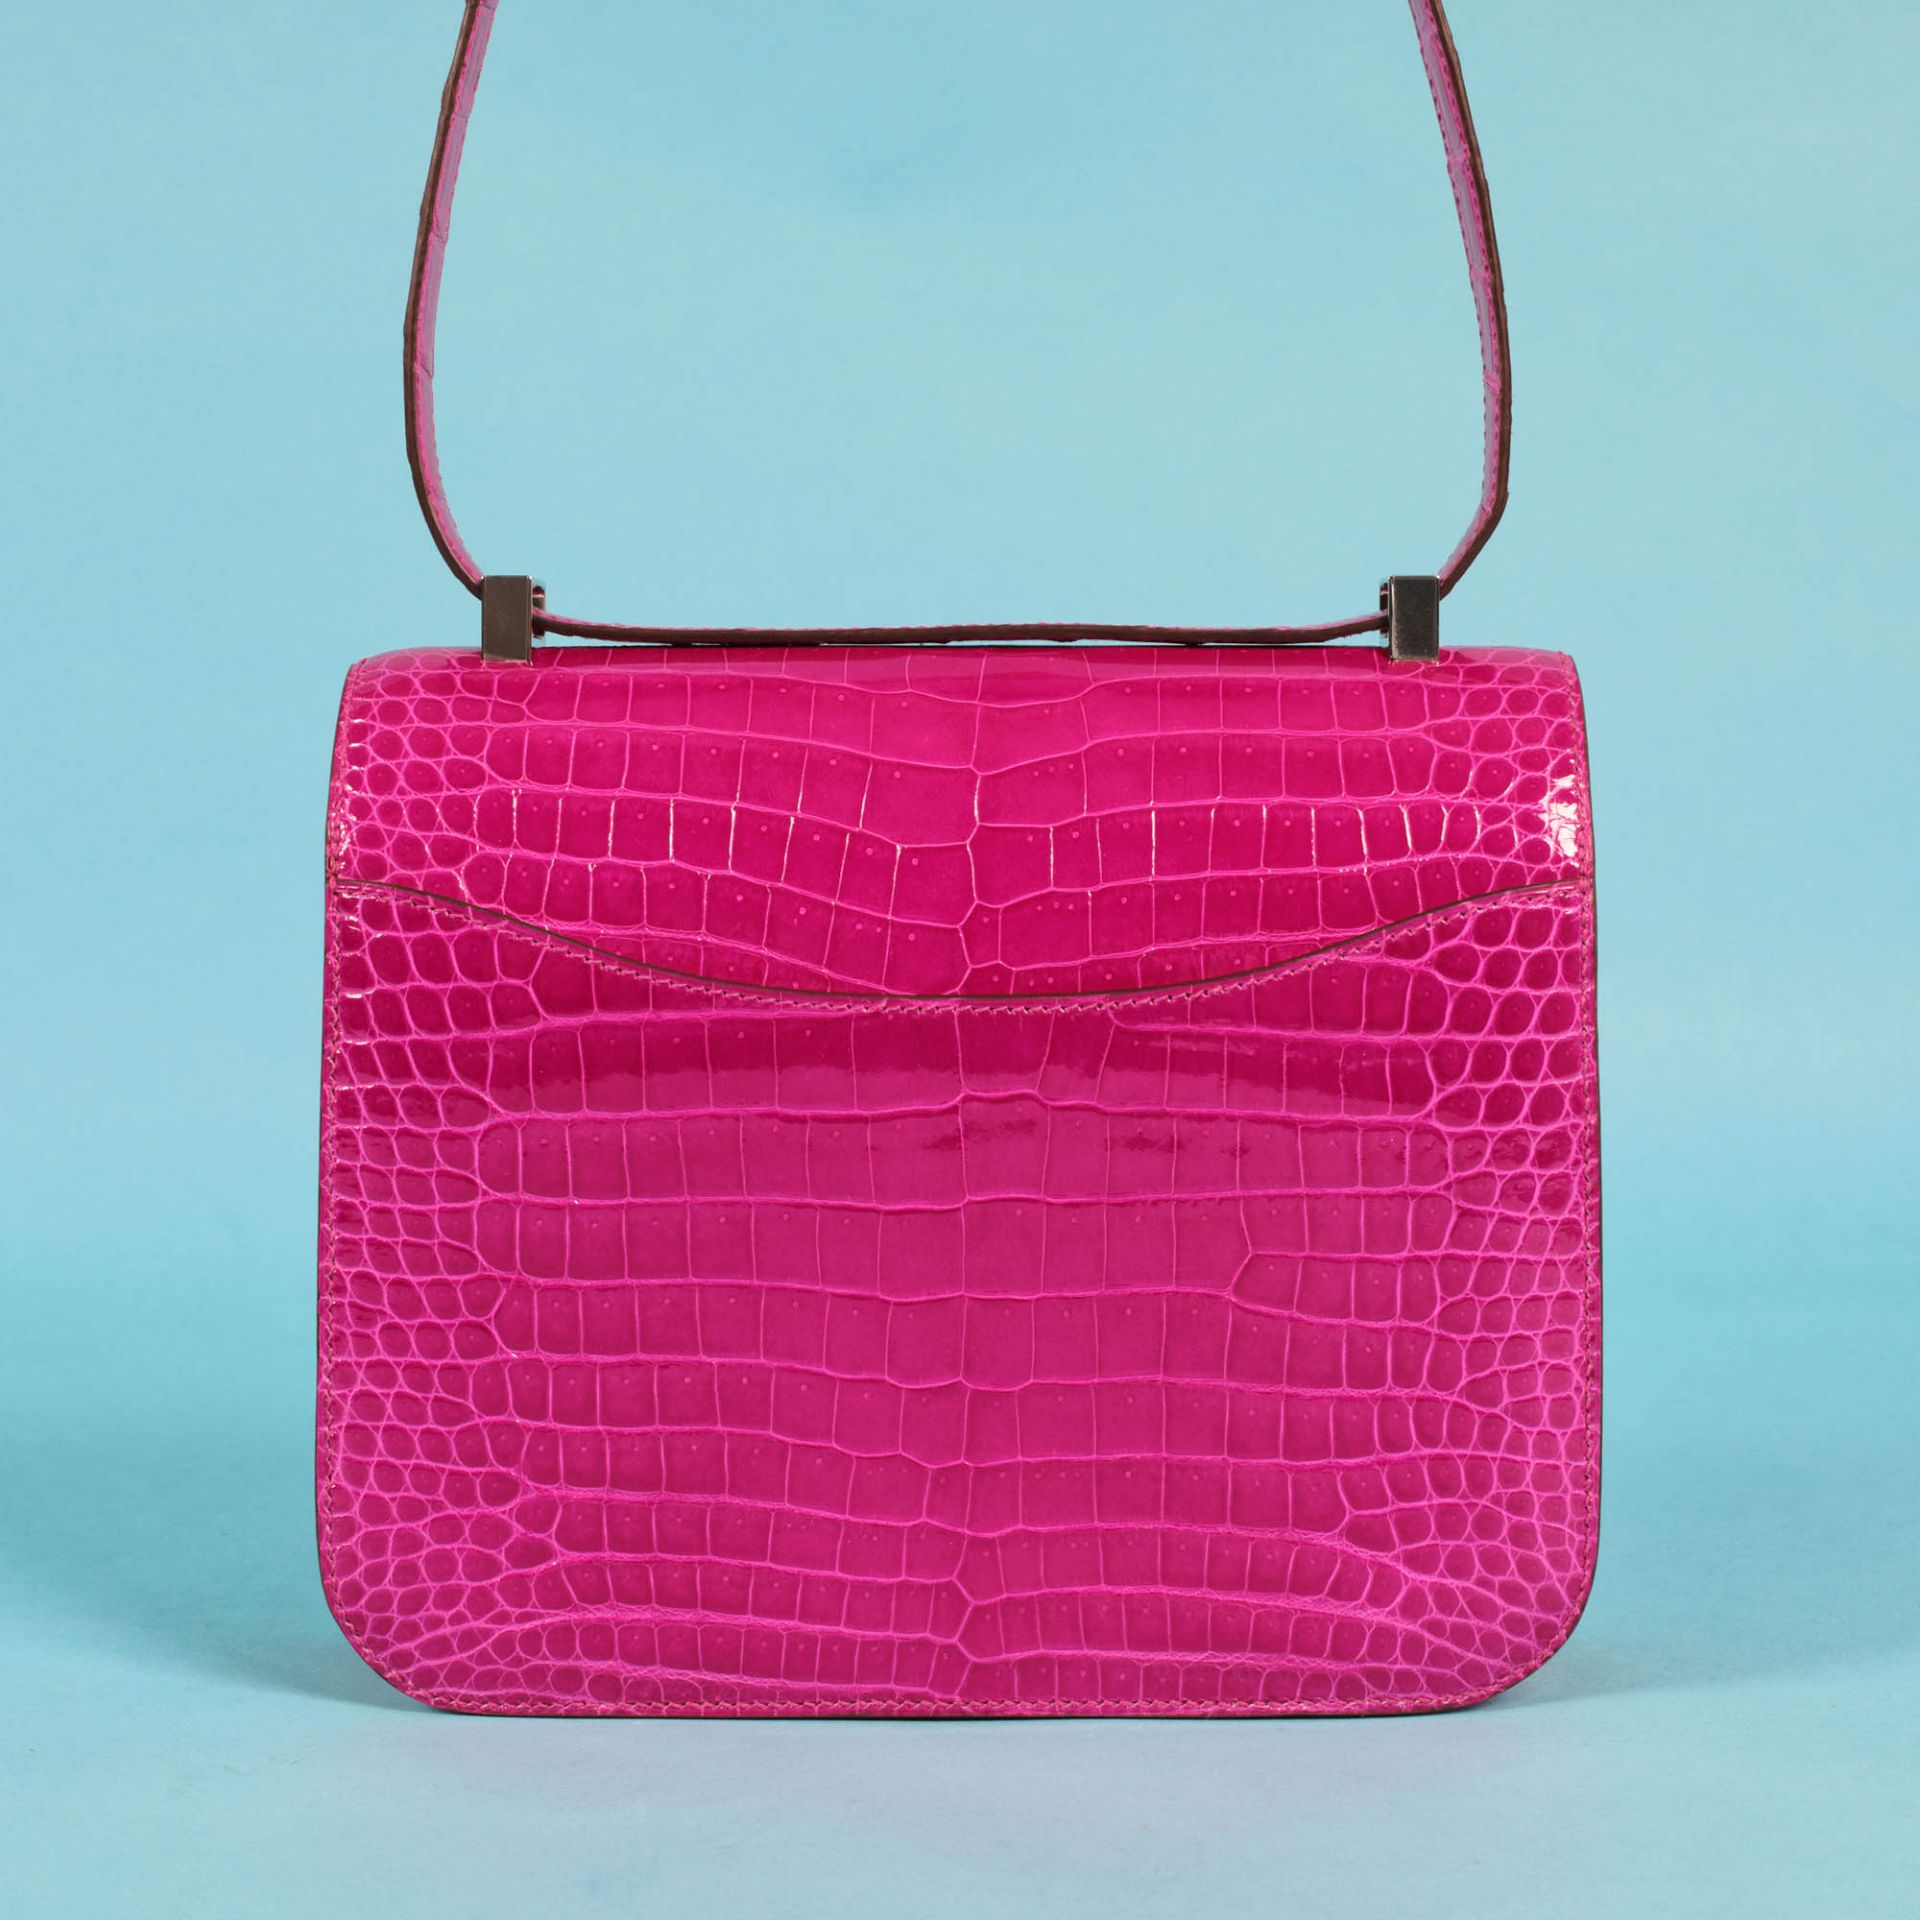 "Constance 24" - Hermès exceptional bag, crocodile leather, colour Rose Scheherazade, for women - Bild 2 aus 8